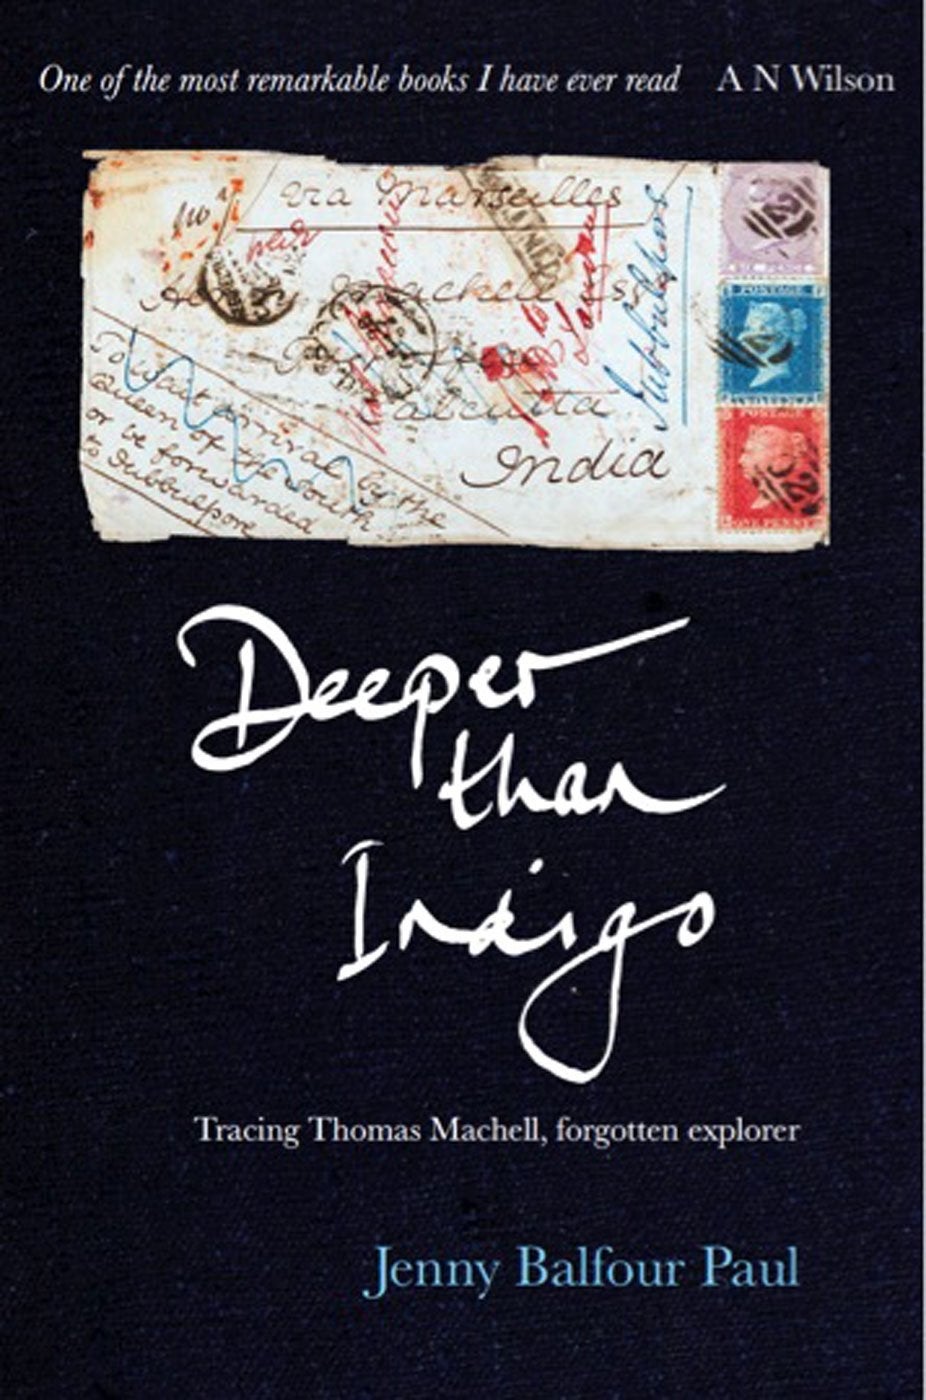 Deeper than Indigo, by Jenny Balfour-Paul